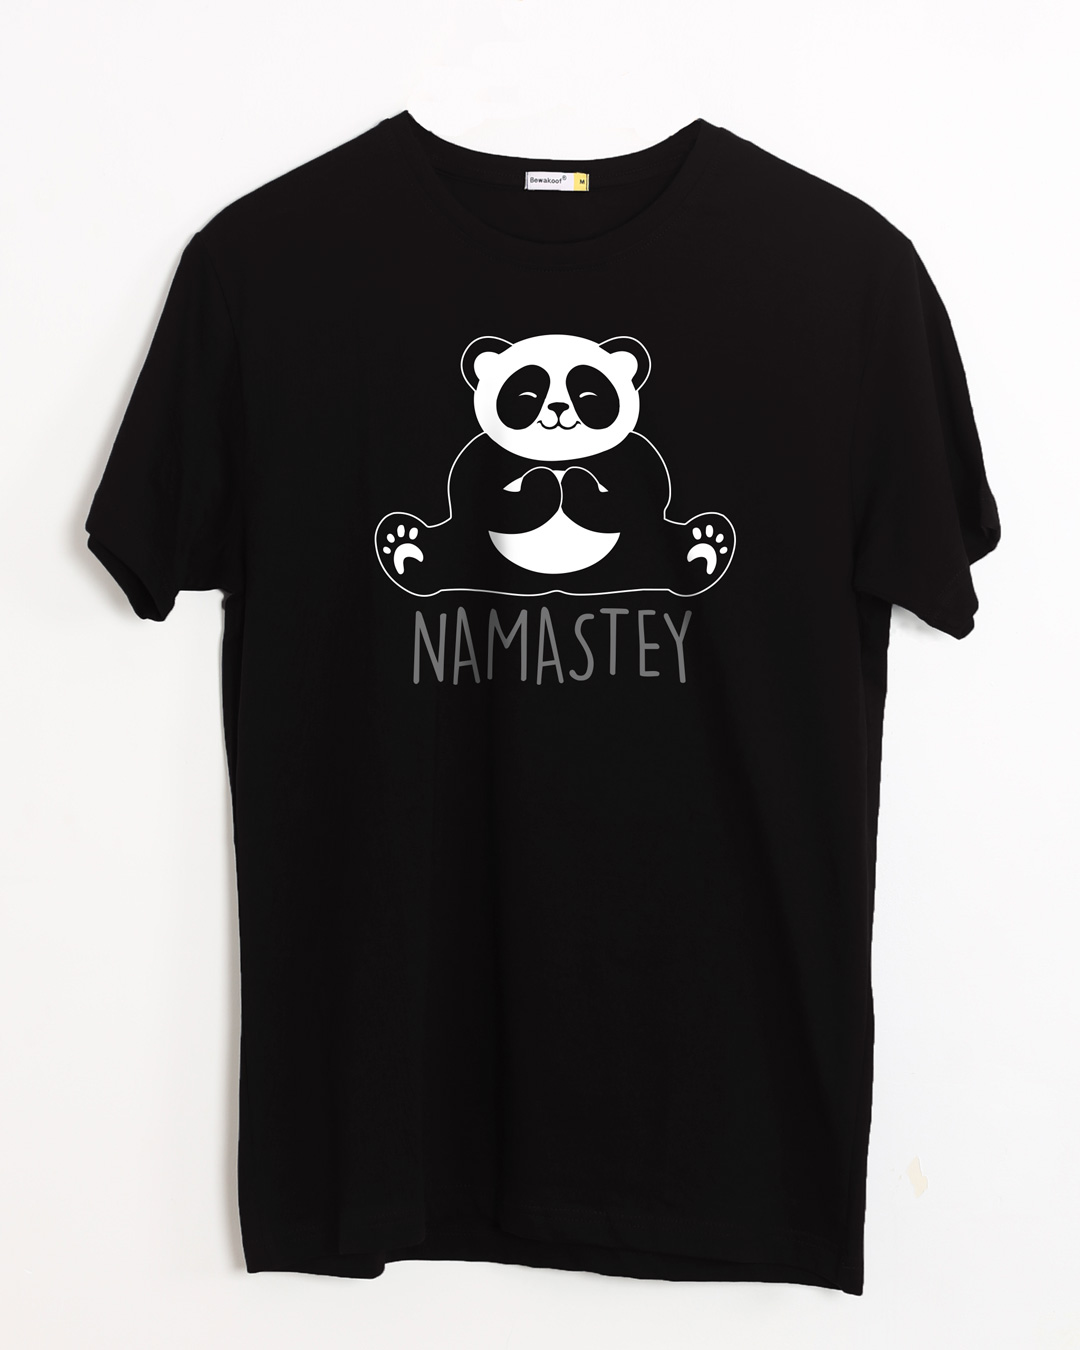 Buy Namastey Half Sleeve T-Shirt Online at Bewakoof